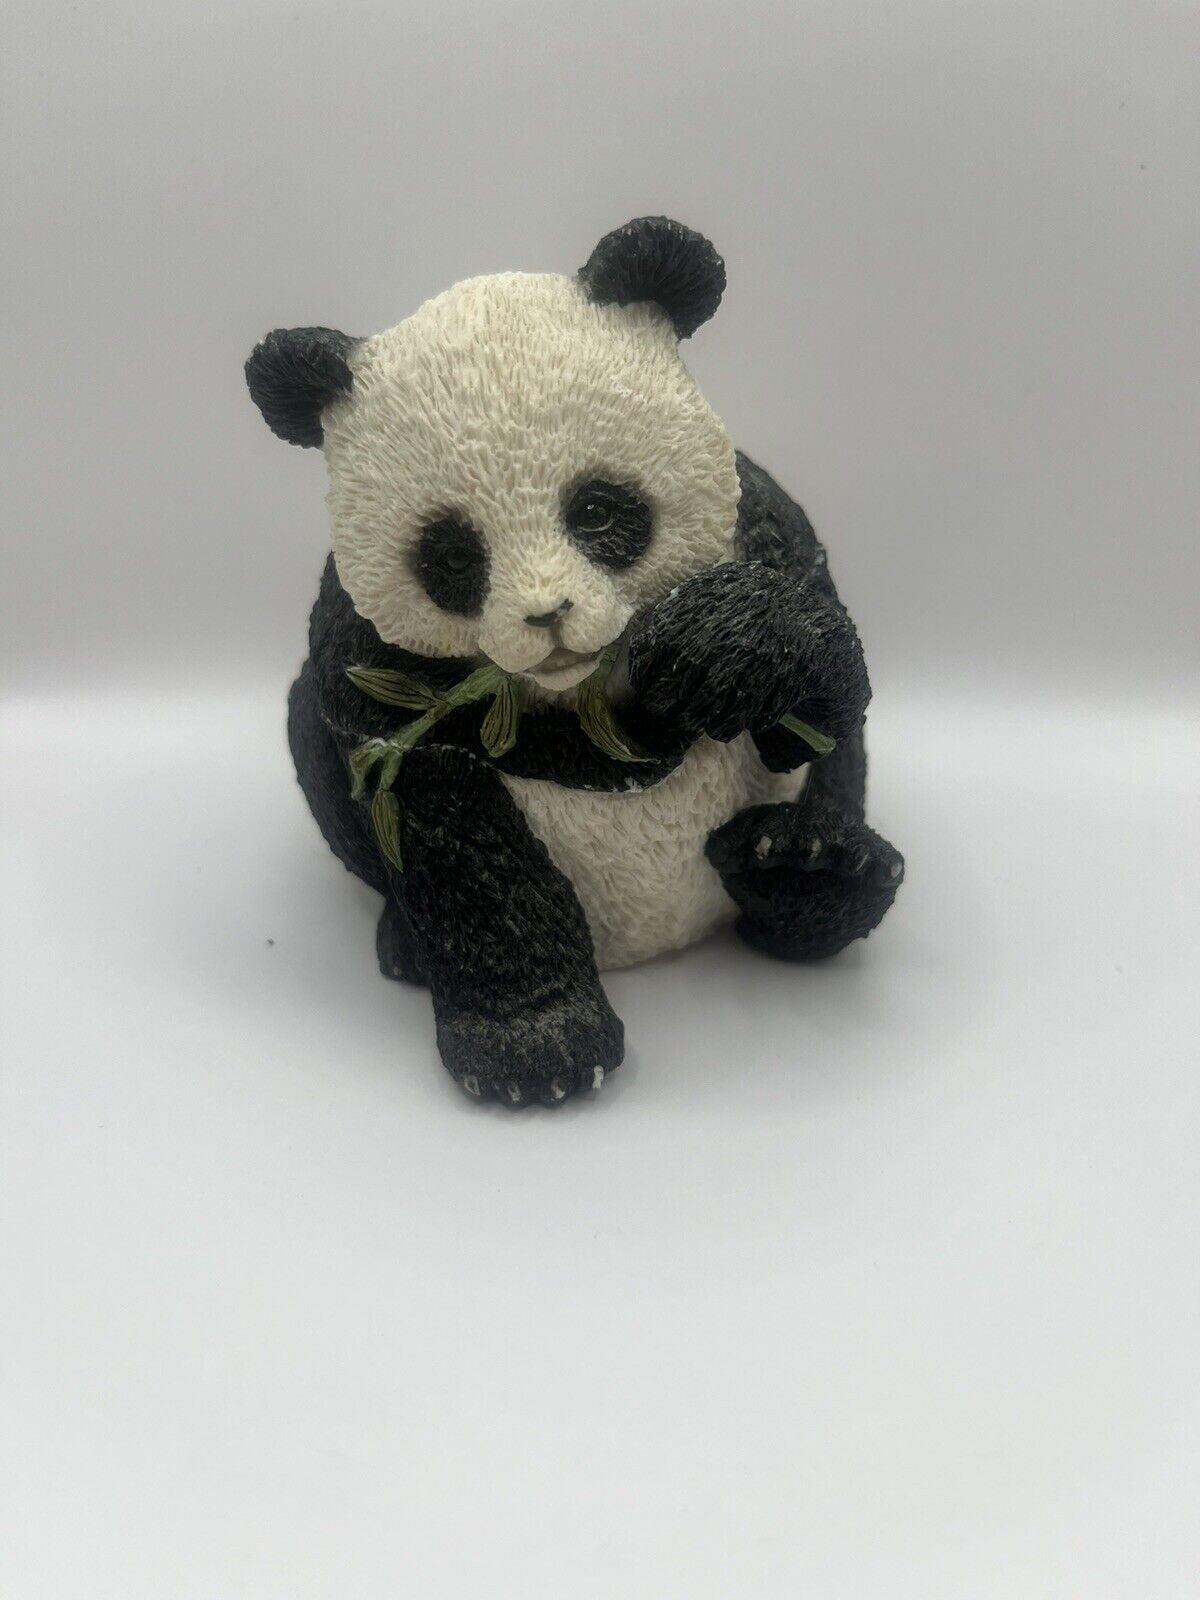 sc stone critter panda Trinket Box with baby panda inside